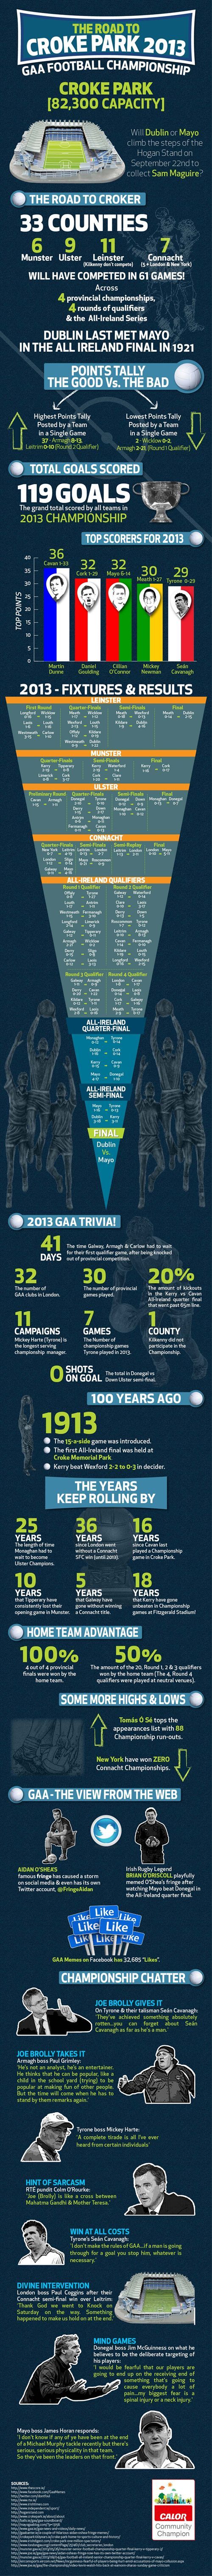 GAA Infographic 2013